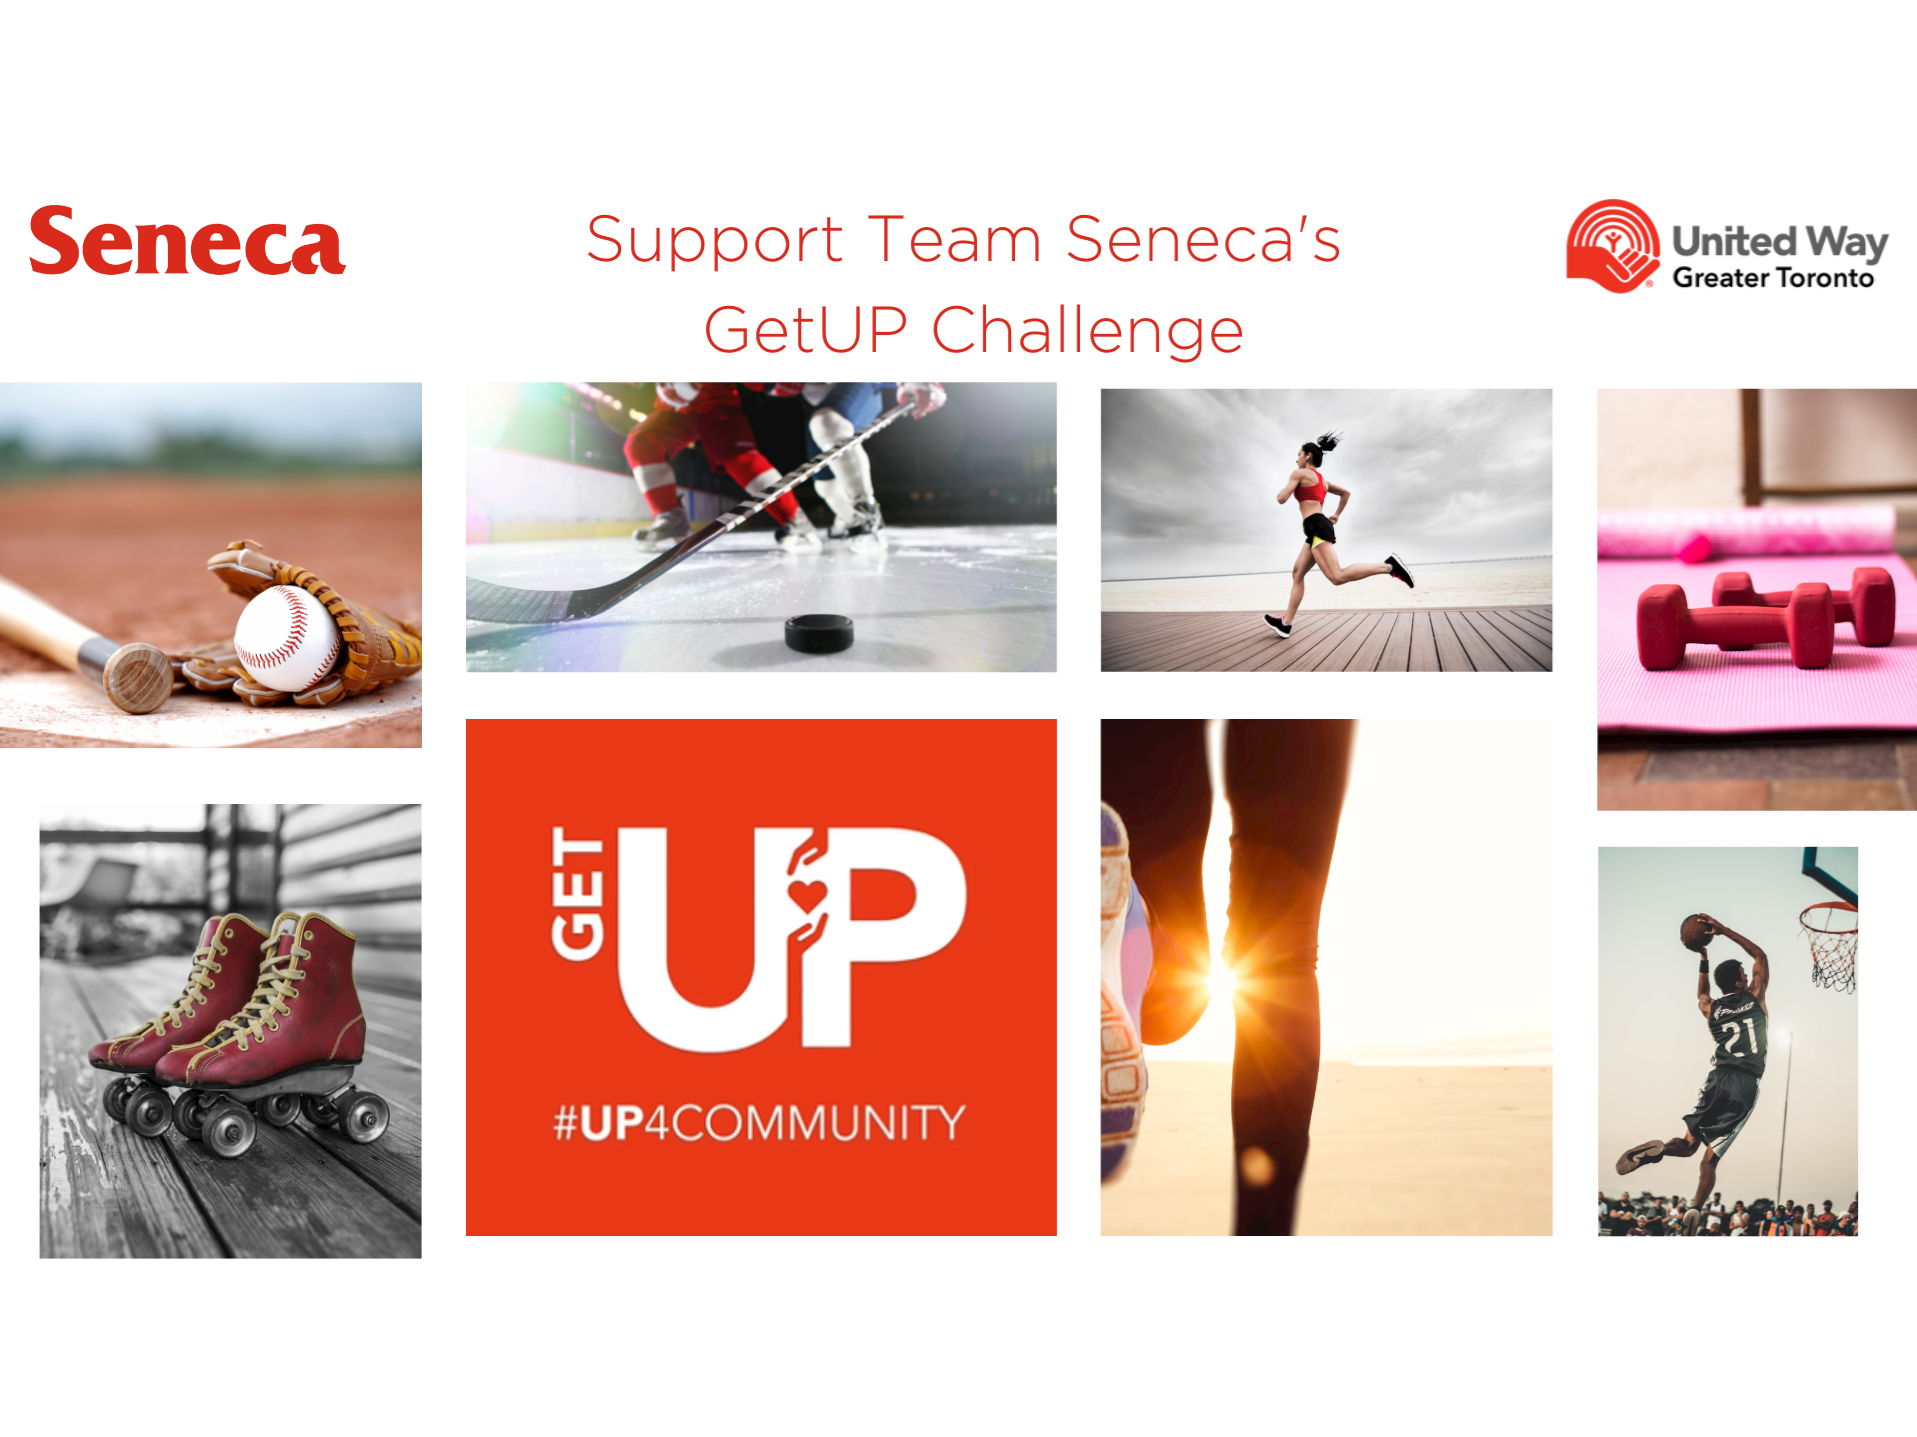 Support Team Seneca's GetUP Challenge